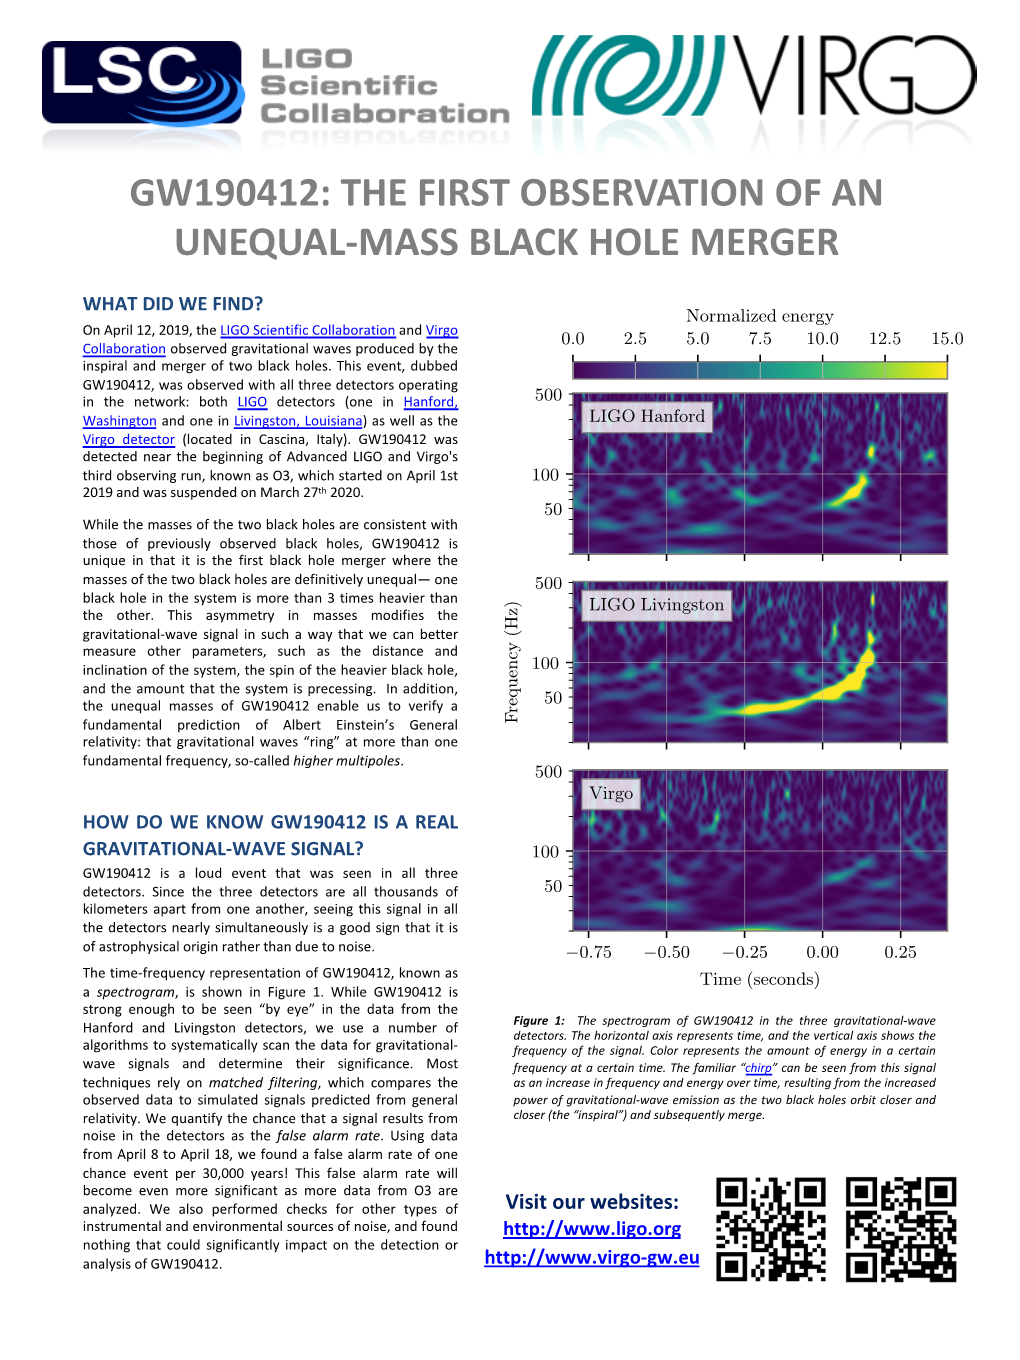 Gw190412: the First Observation of an Unequal-Mass Black Hole Merger